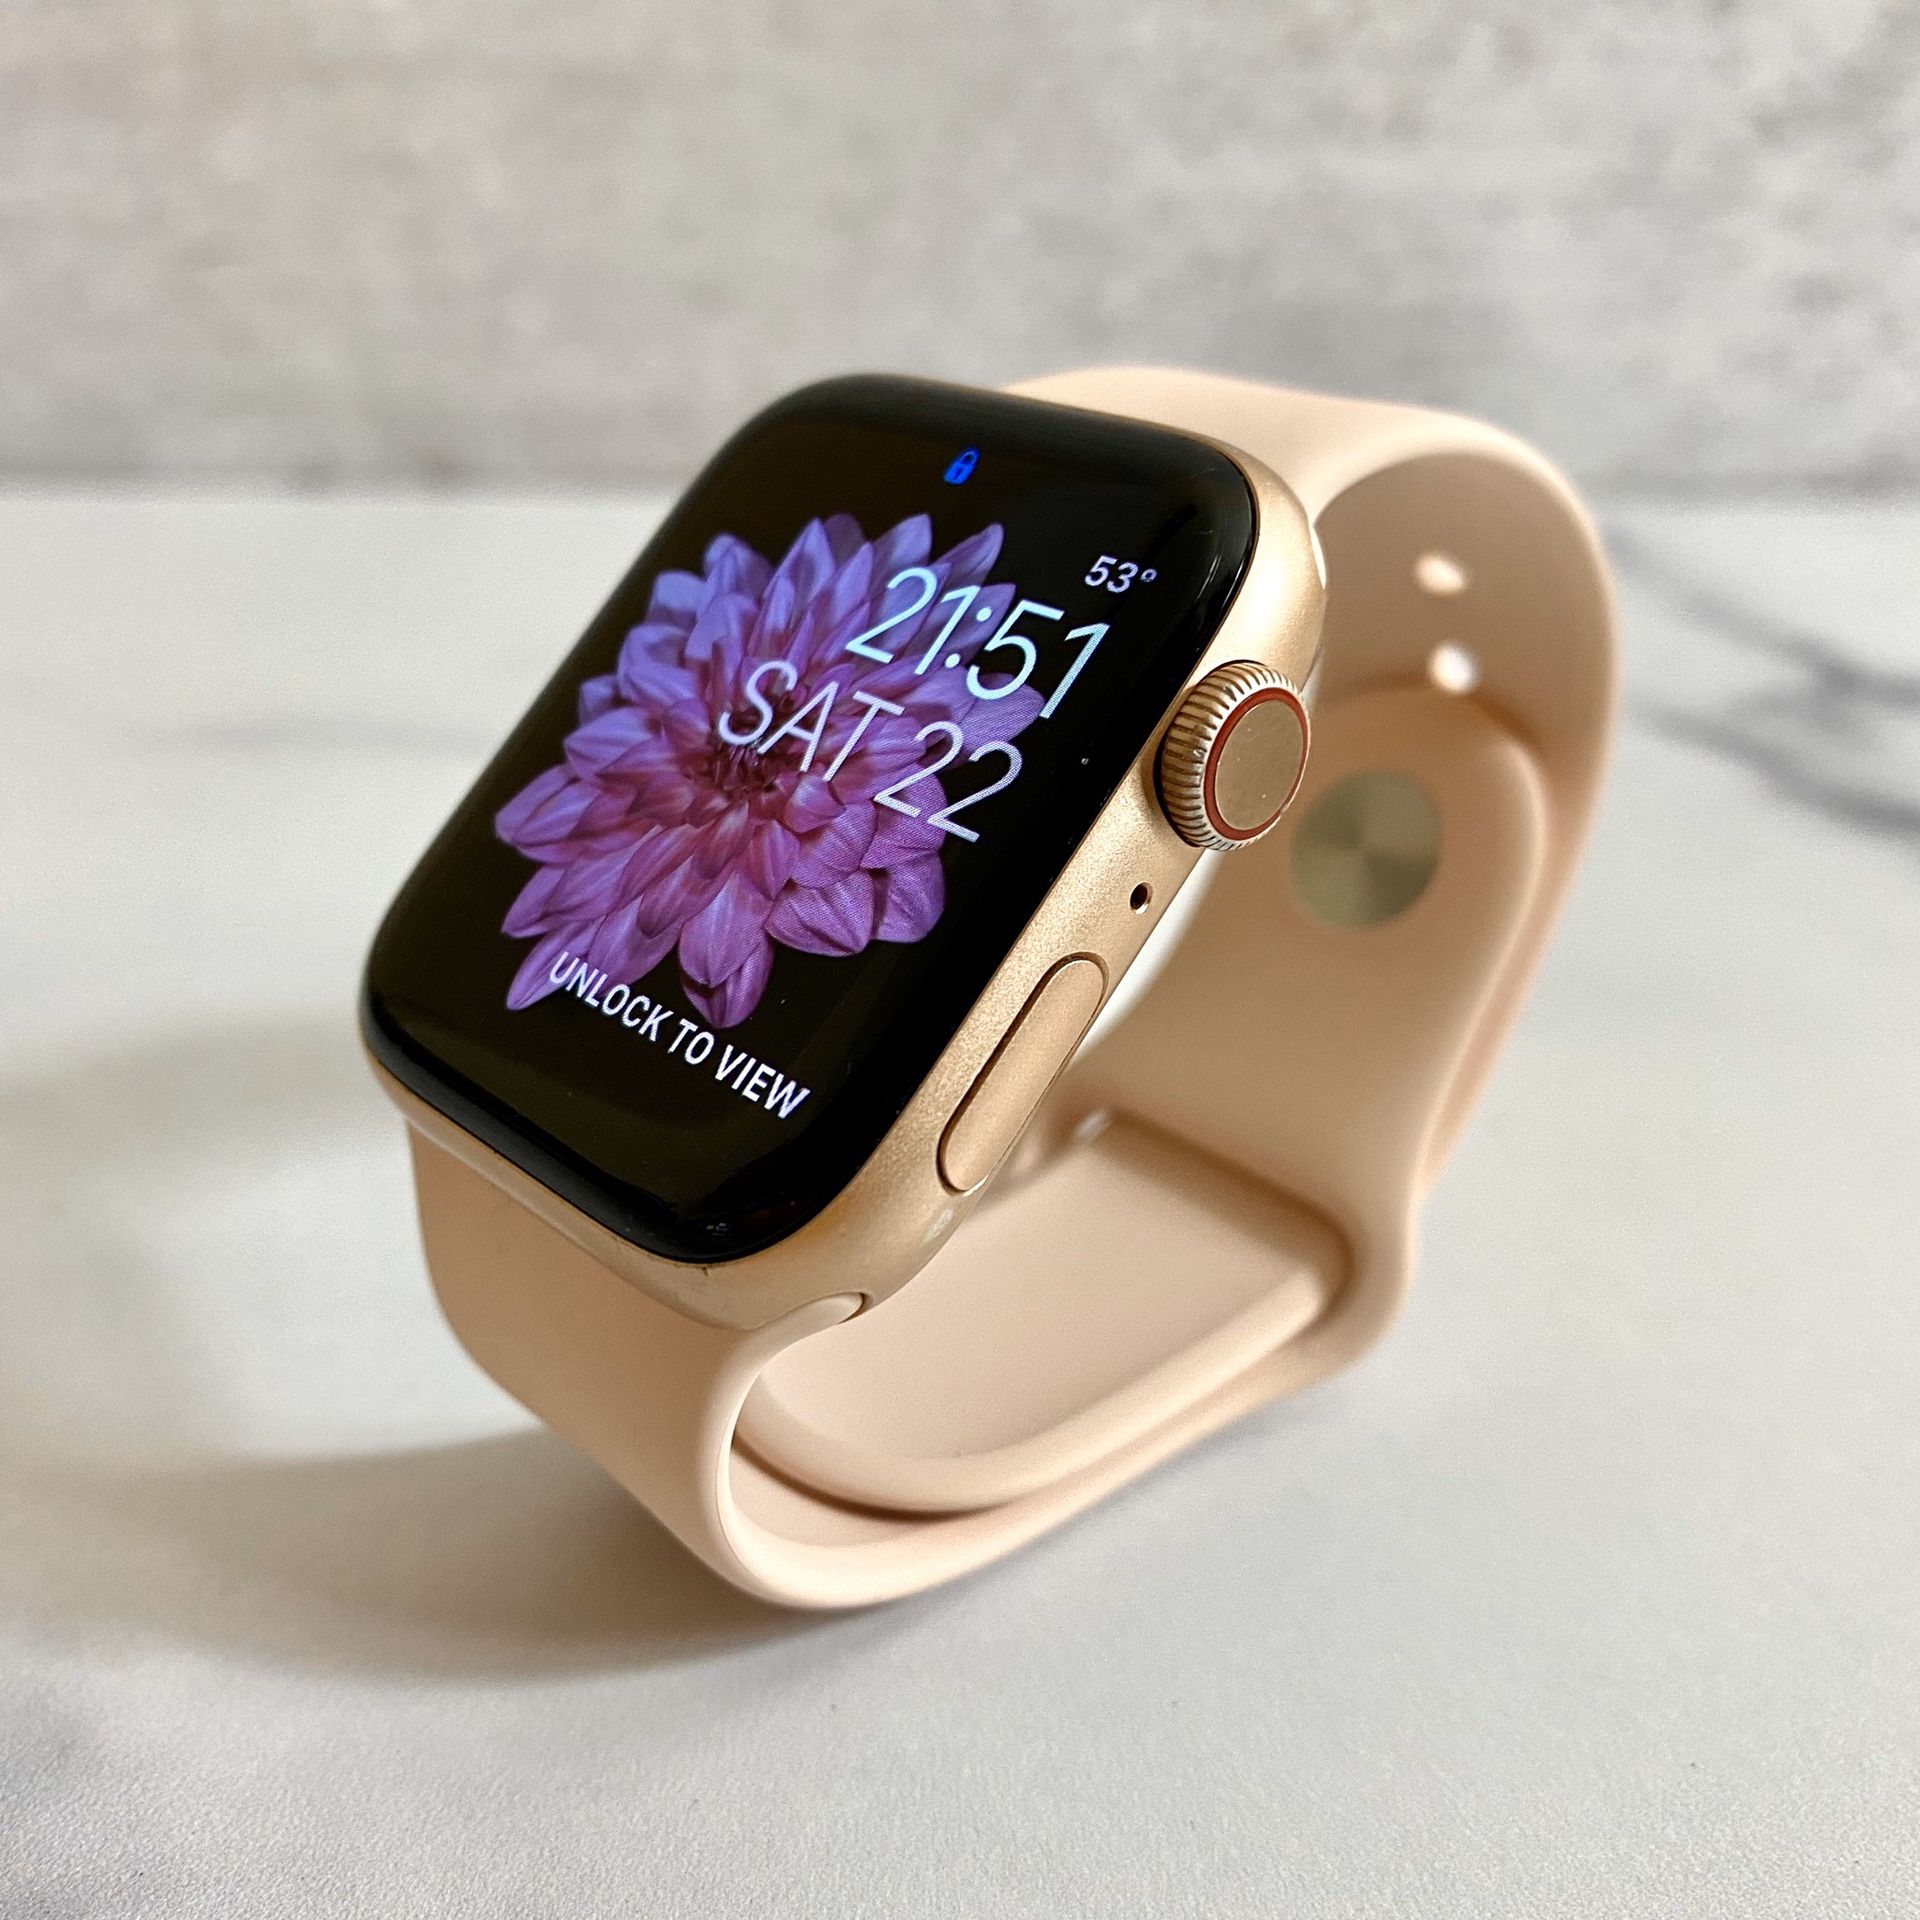 Apple Watch Series 4 - Rose Gold, 44MM, GPS + LTE, Cellular, For ATT.